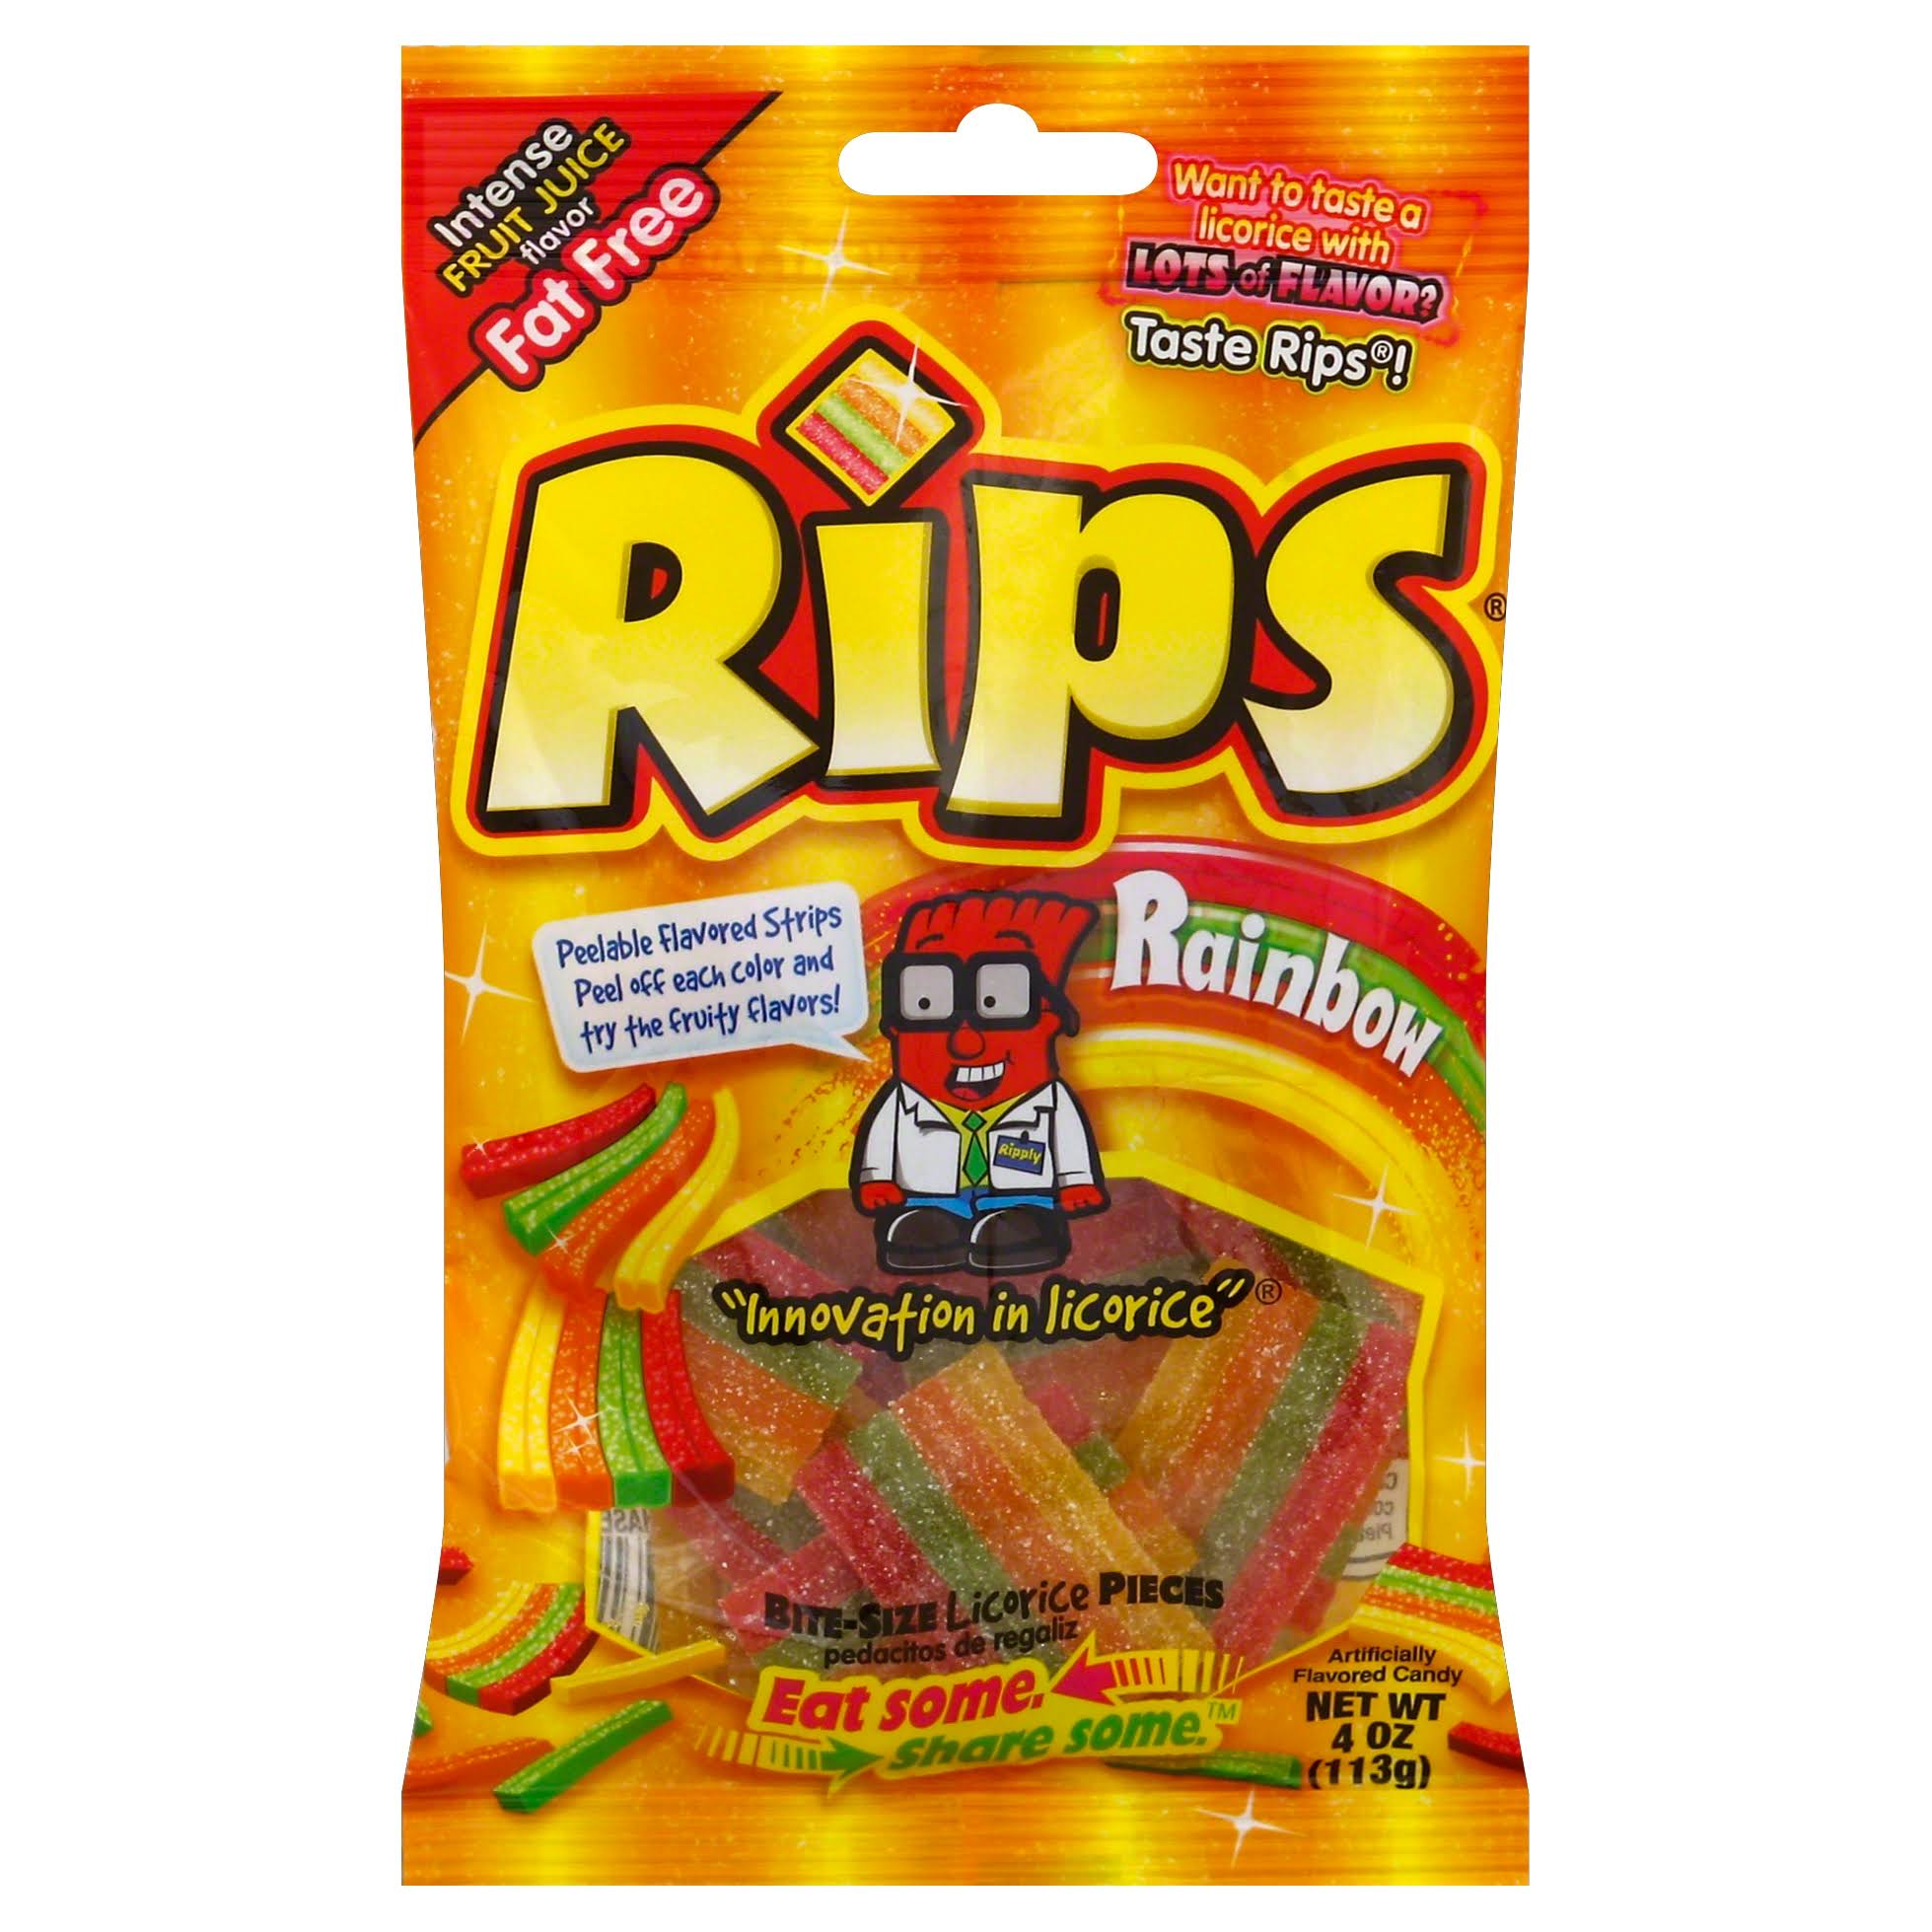 Rips Rainbow Bite-Size Licorice